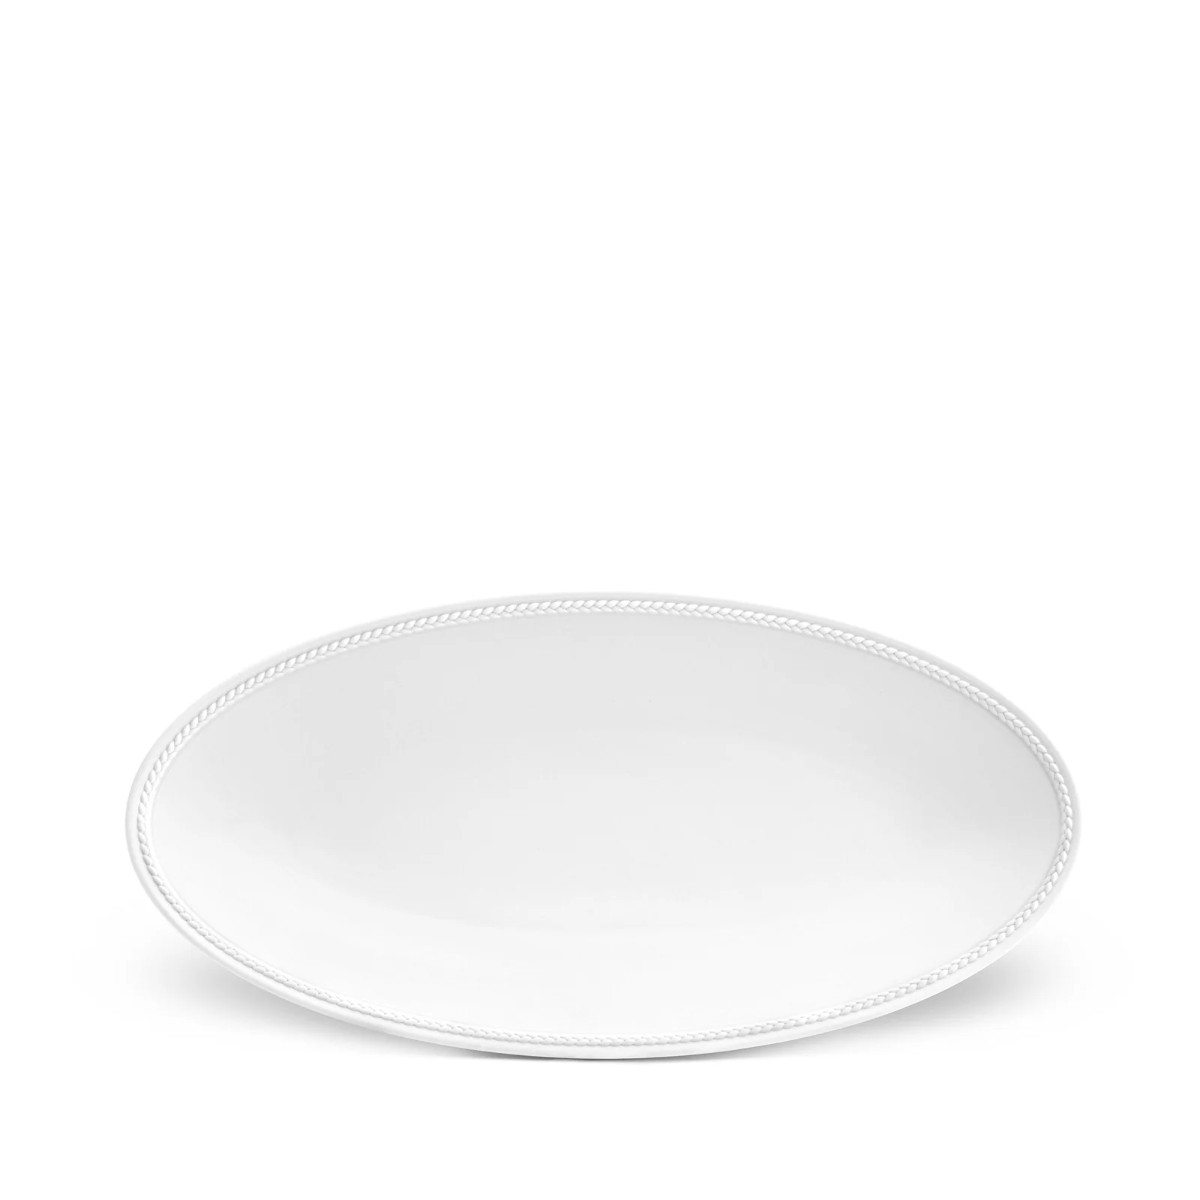 L’Objet | Soie Tressee Oval Platter - Small | White